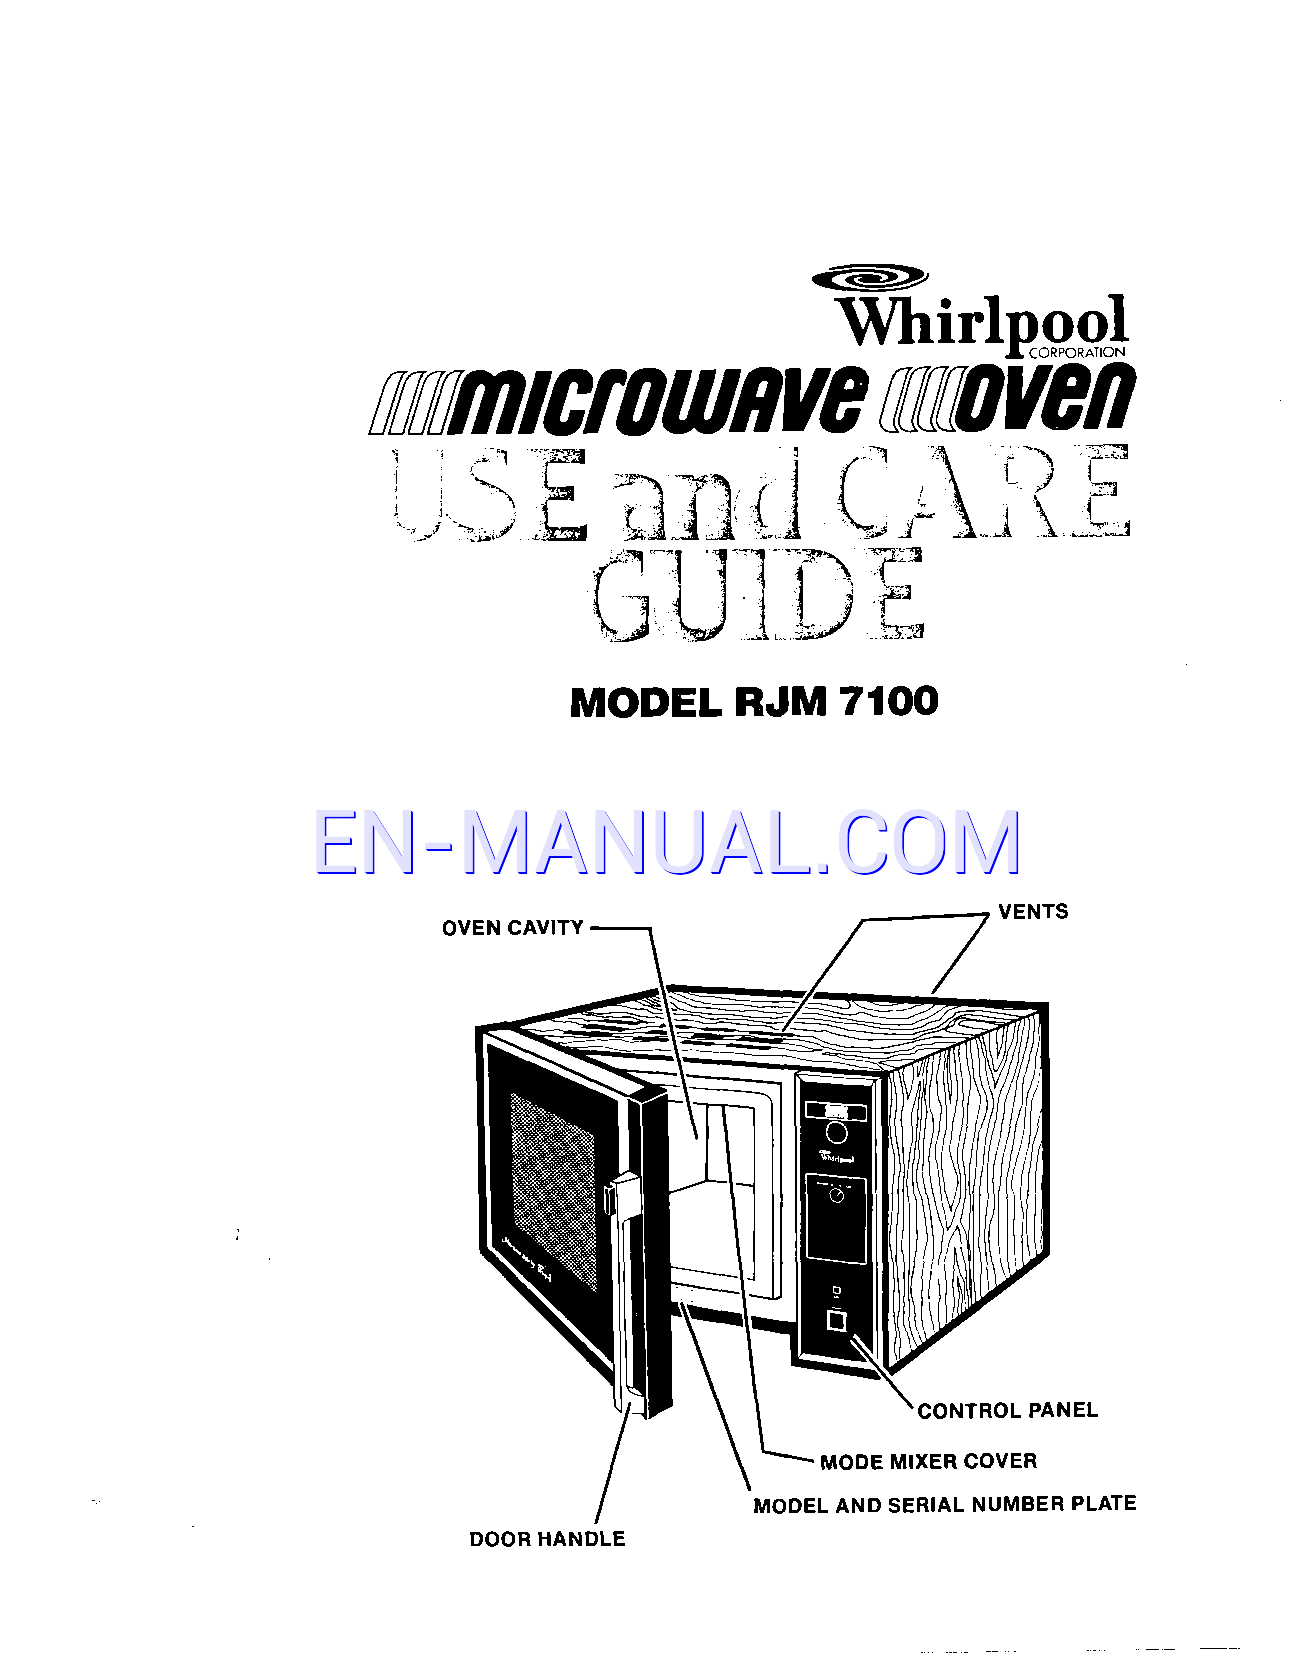 Leer online Manual de usuario para Whirlpool RJM 7100 (Page 1)